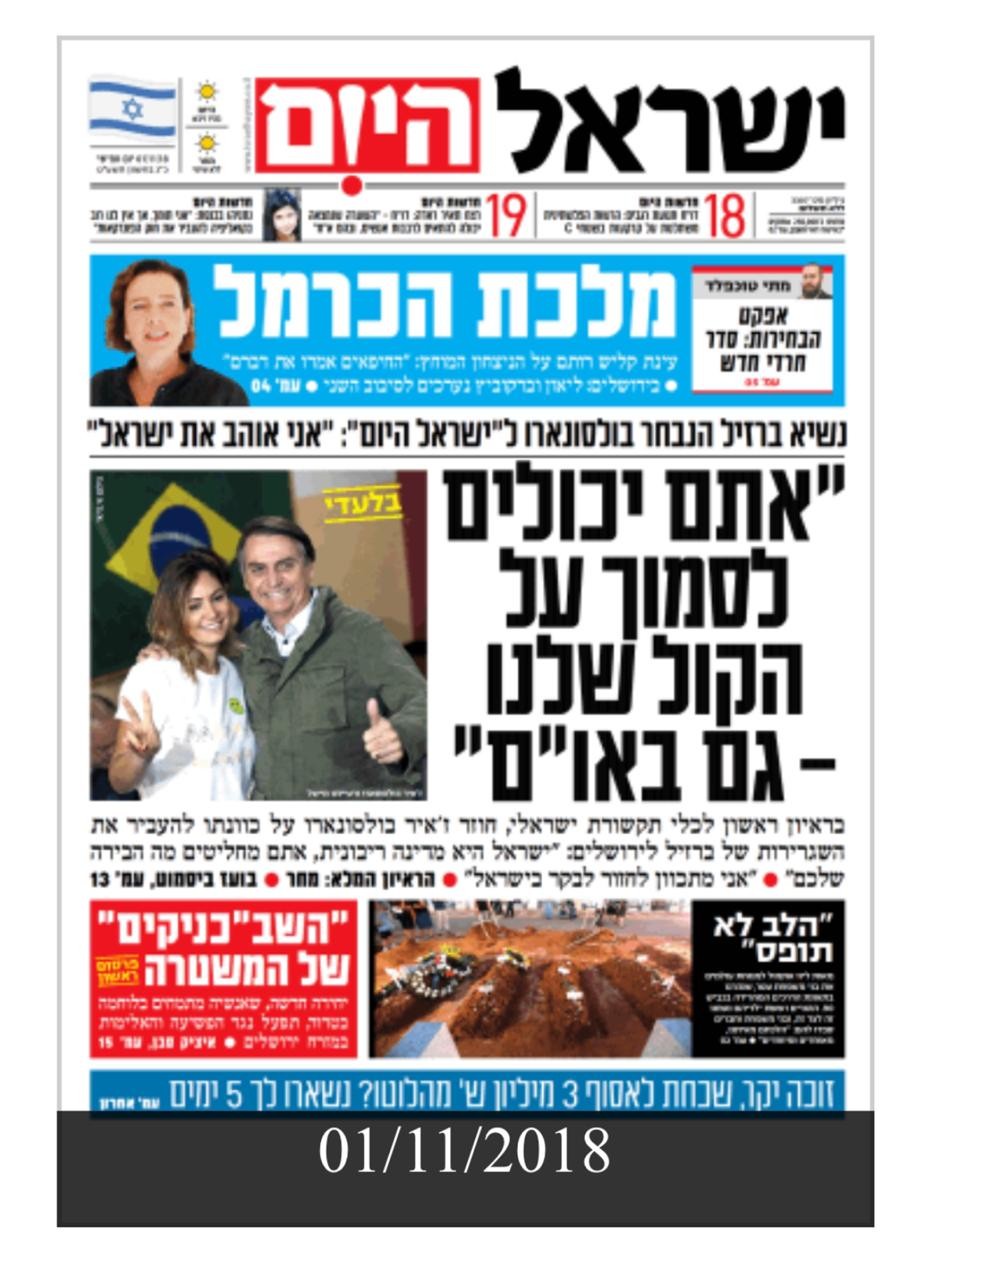 A capa do jornal israelense com foto de Bolsonaro